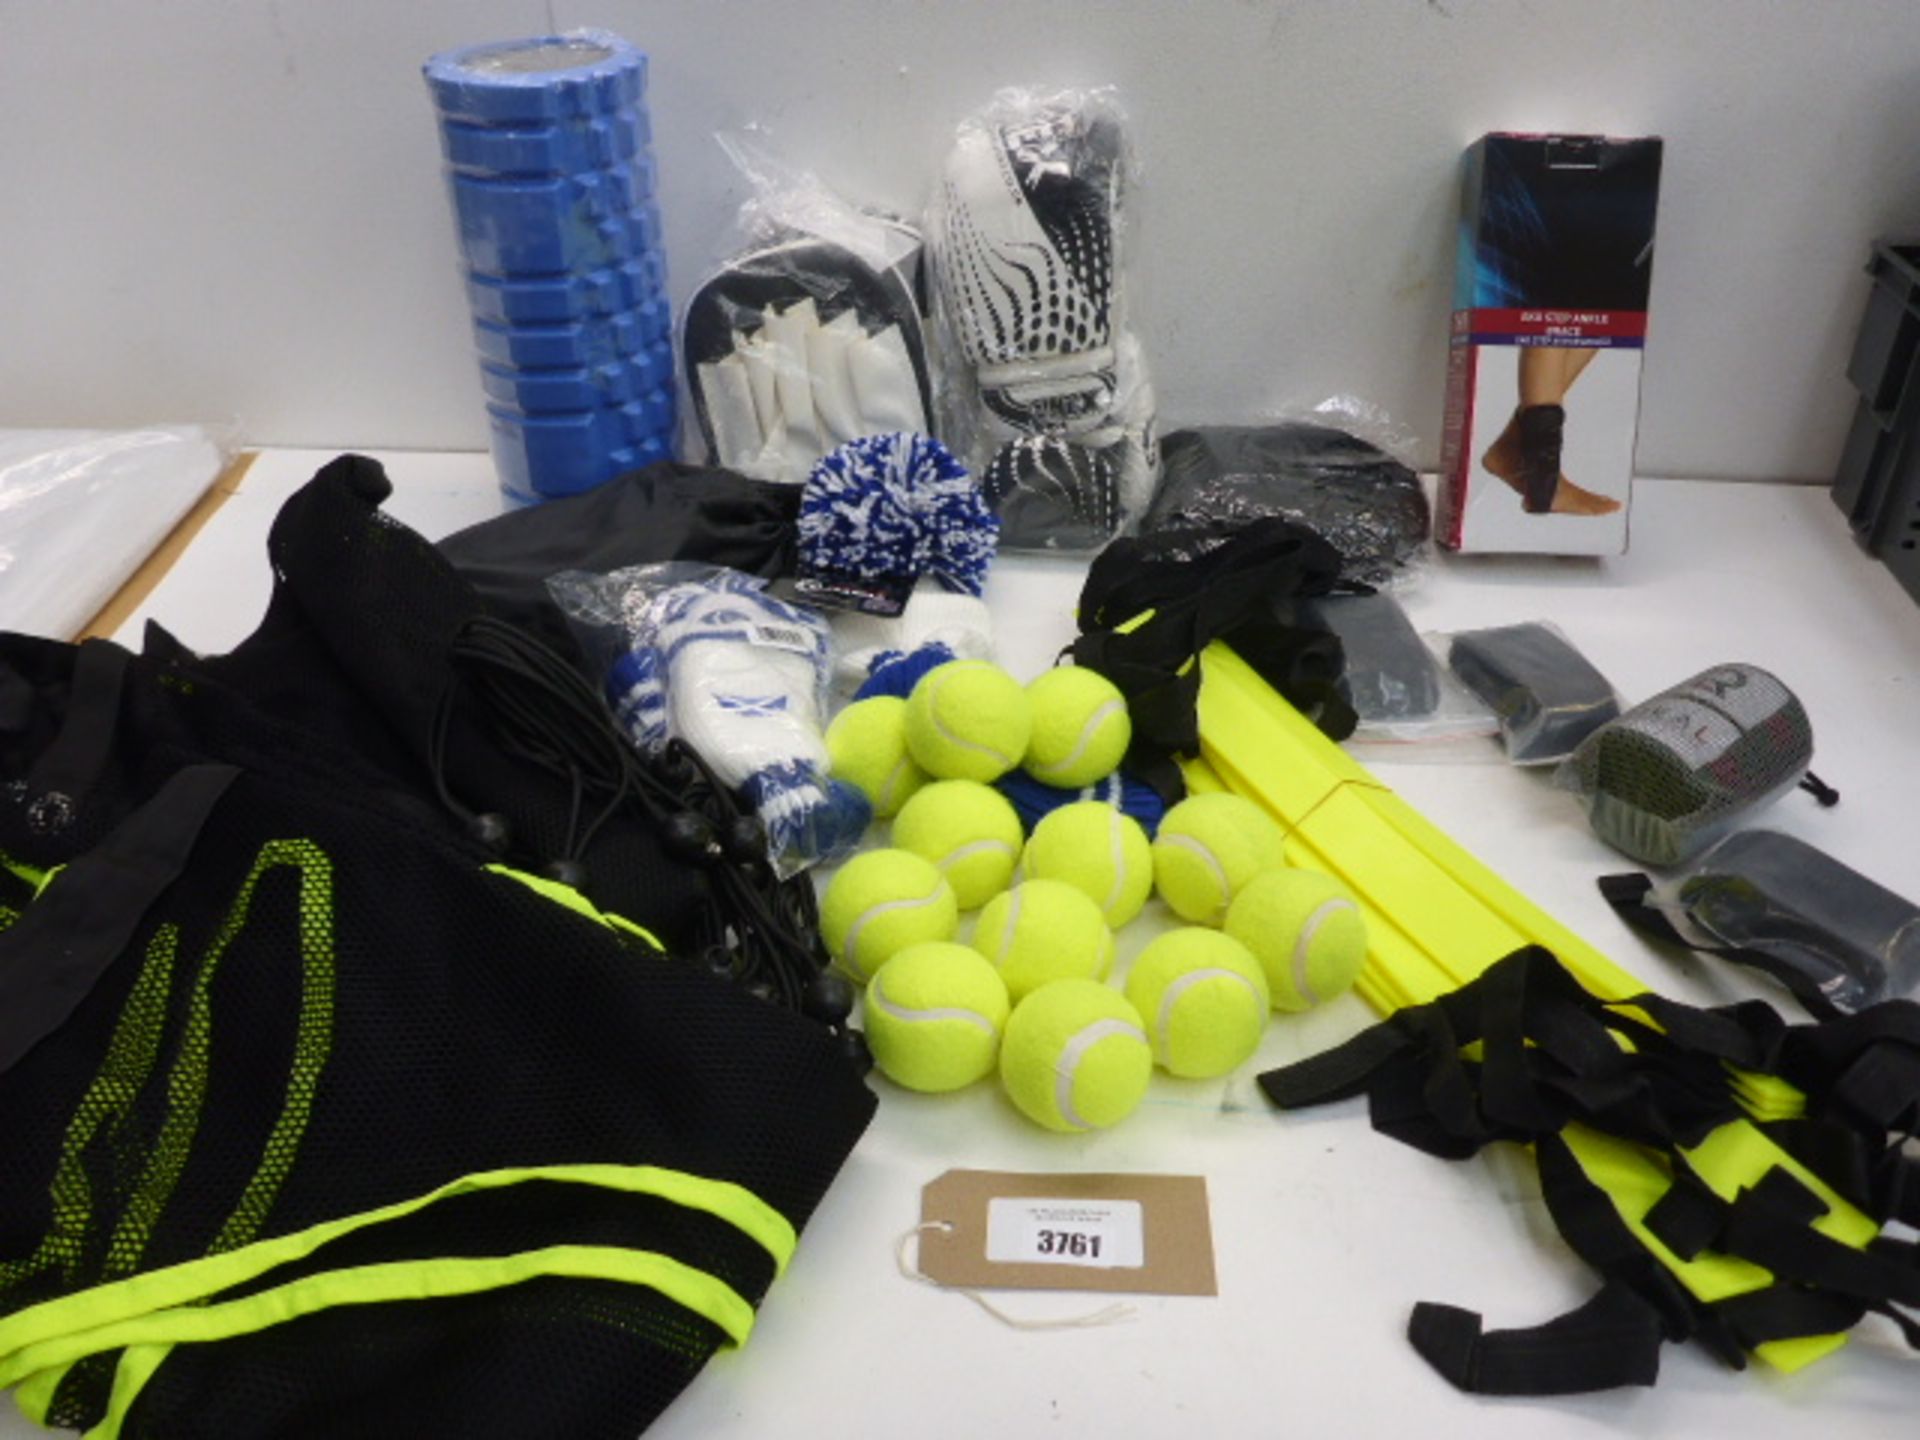 Football practice nets, foam roller, Boxing & sparing gloves, resistance bands, tennis balls,